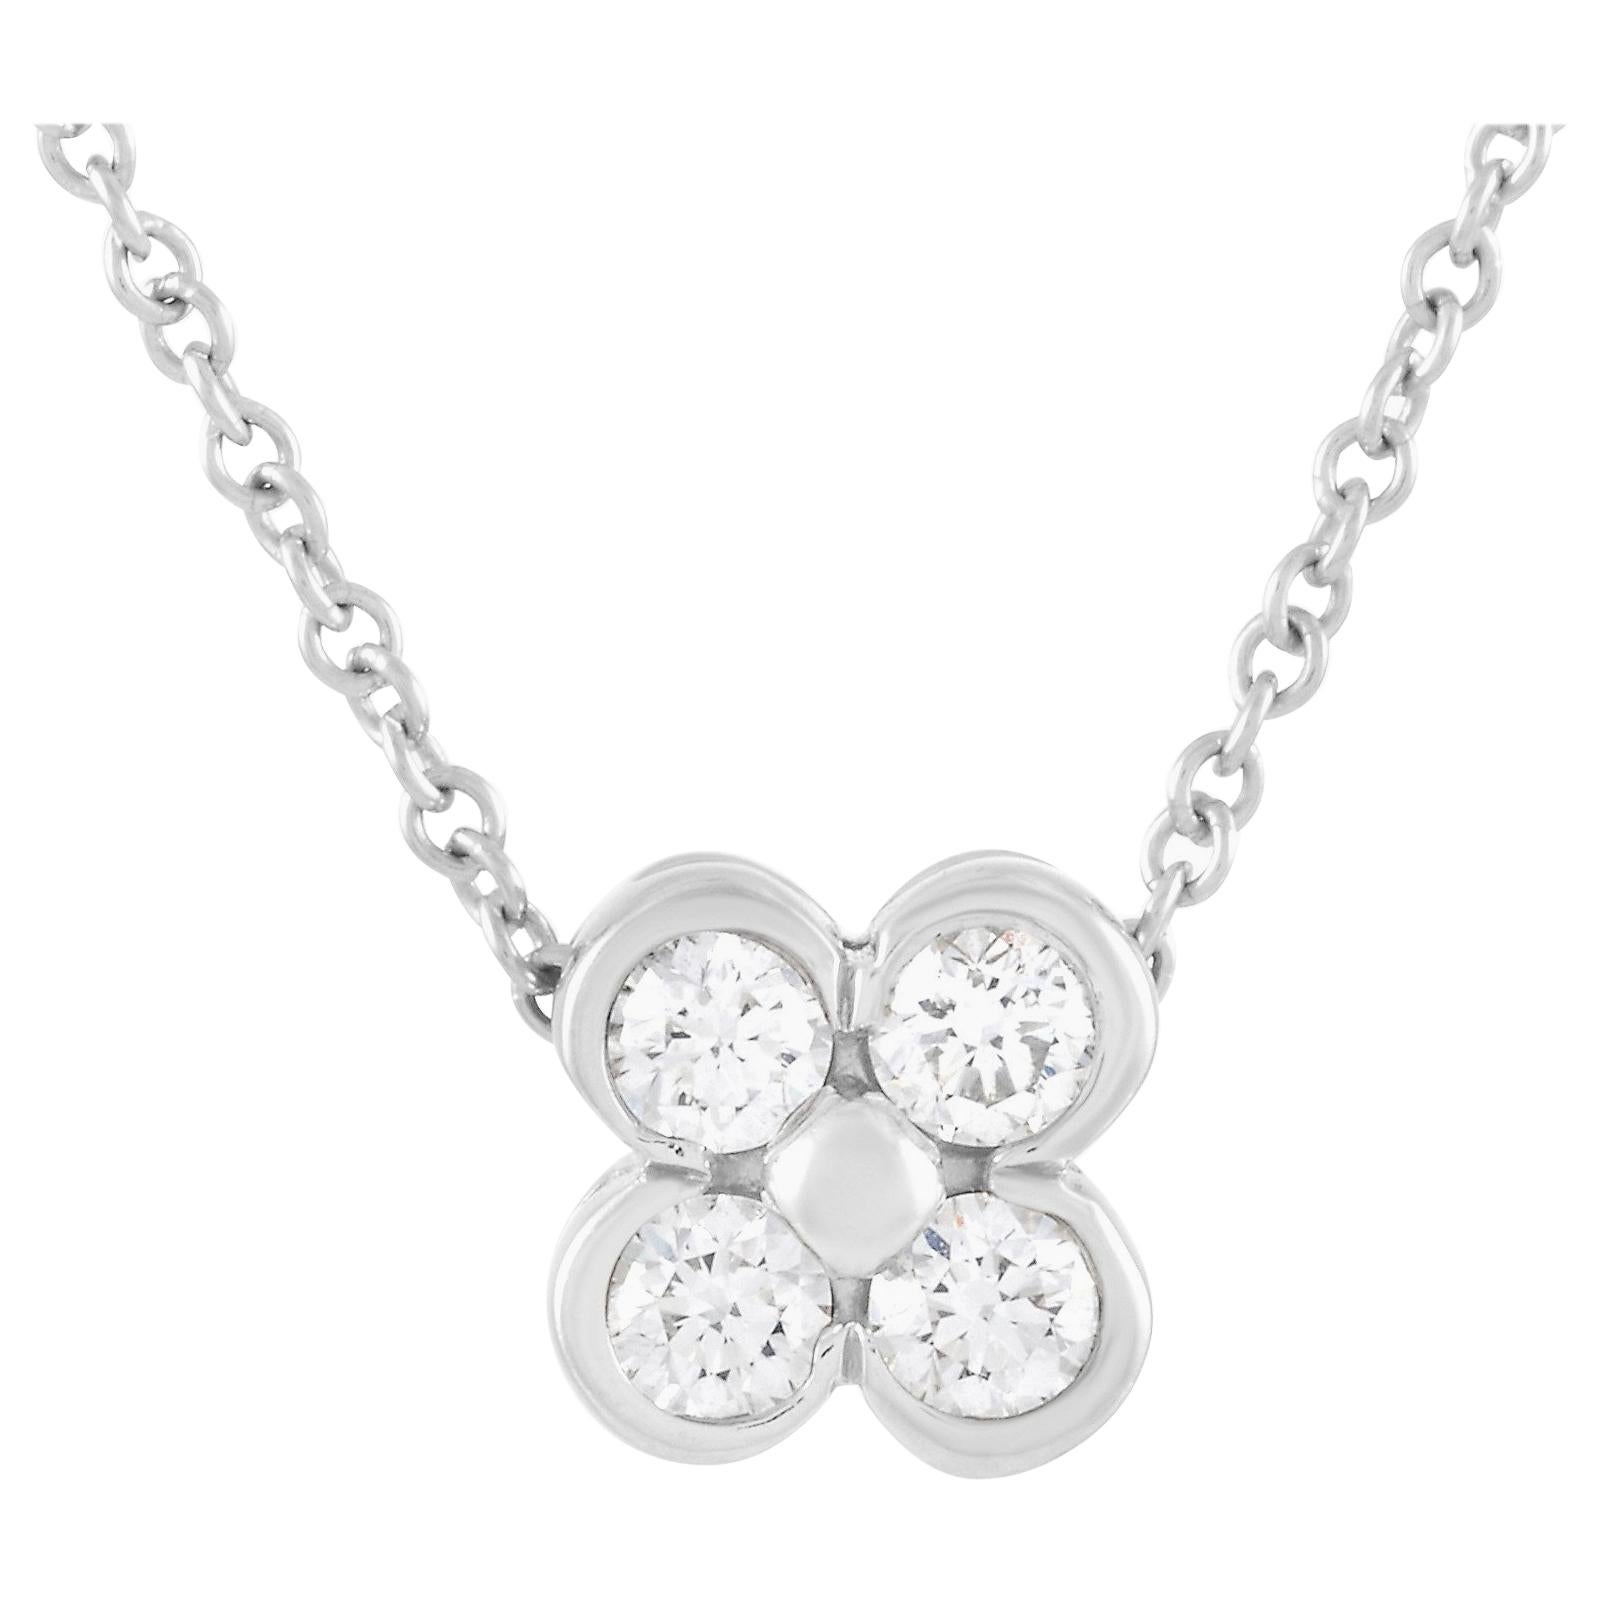 Tiffany & Co. Platinum Diamond Pendant Necklace